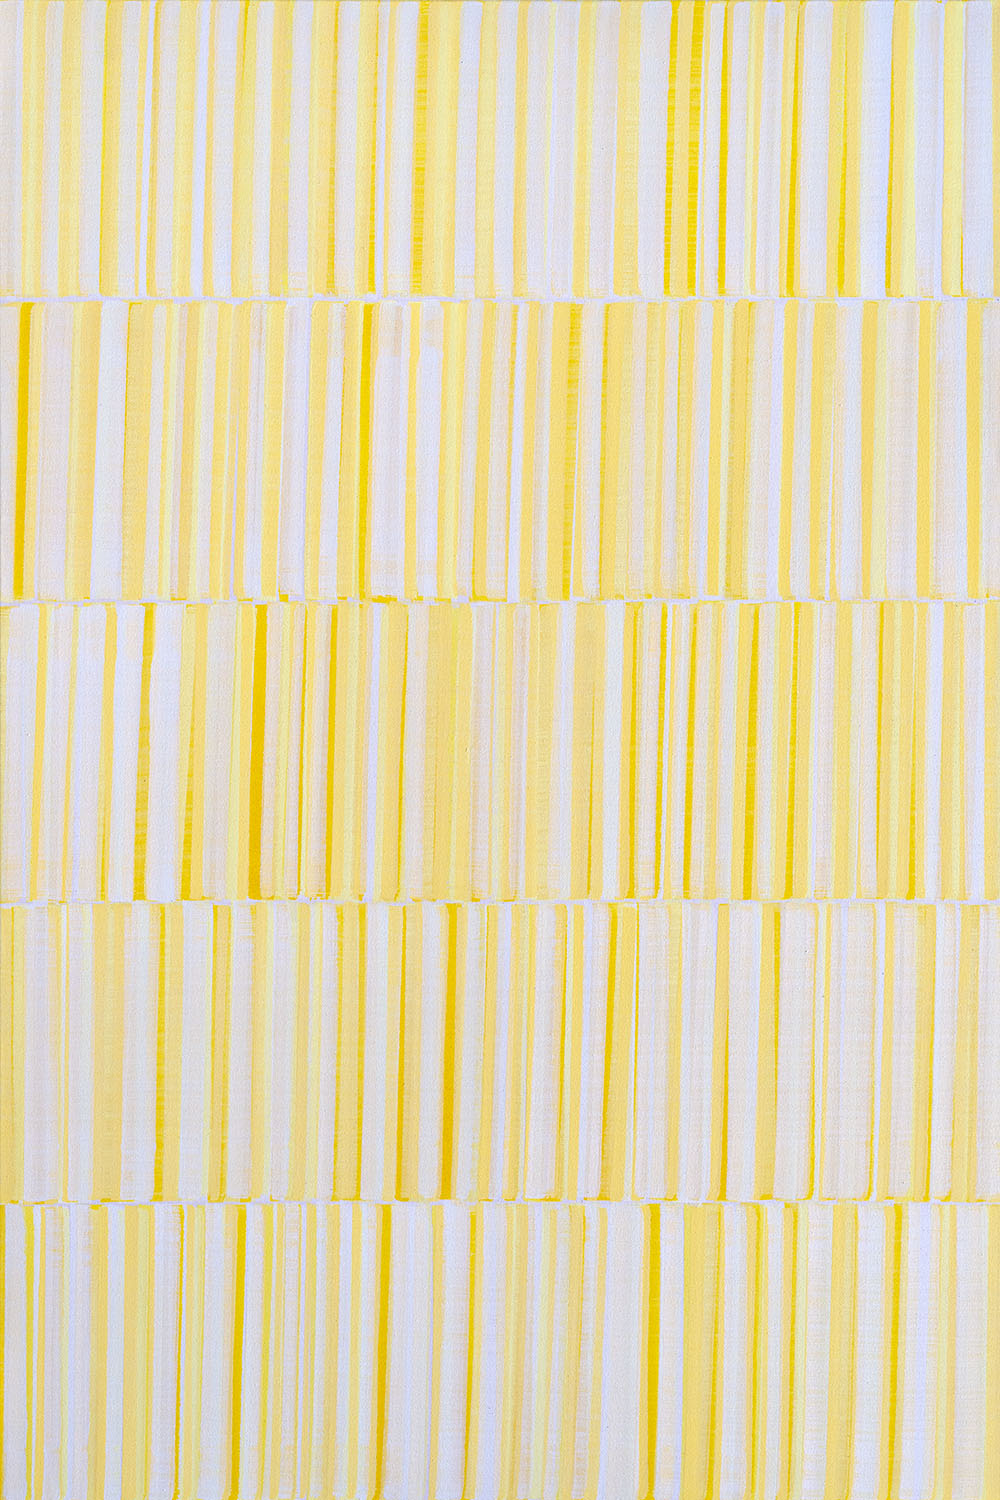 Nikola Dimitrov, FarbraumGelb III, 2019, Pigmente, Bindemittel auf Leinwand, 150 × 100 cm